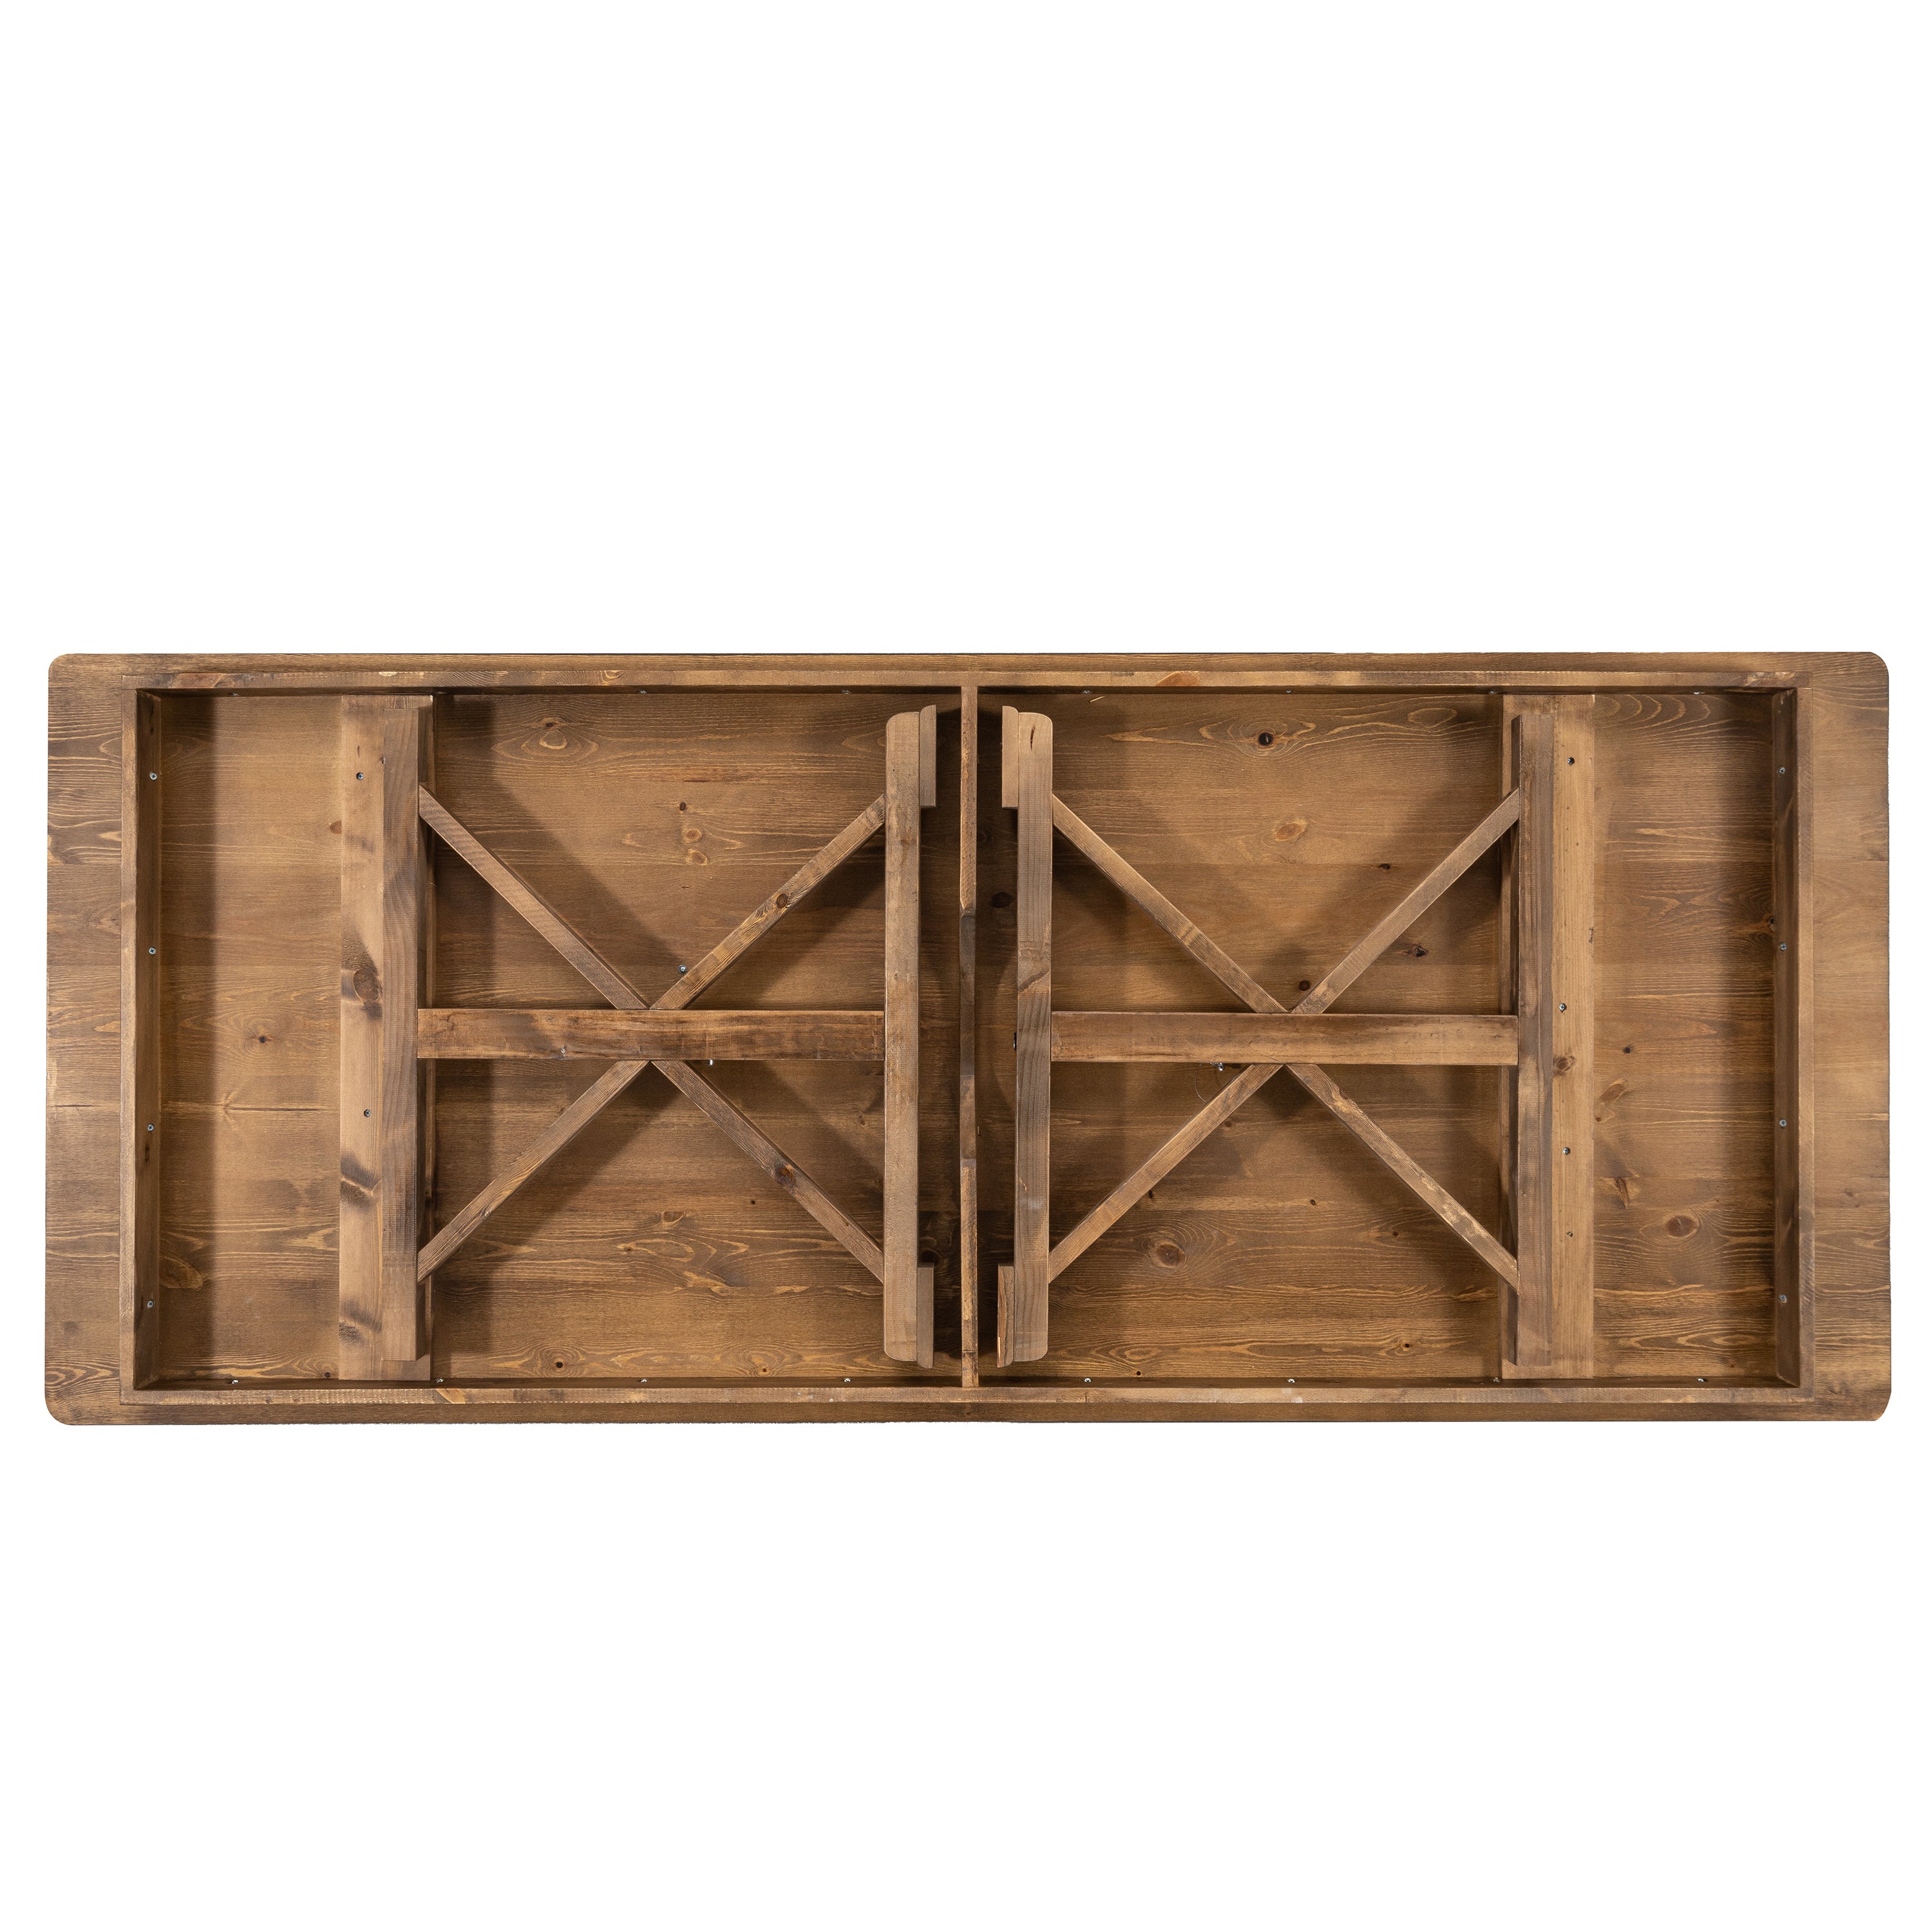 HERCULES 7' x 40" Rectangular Solid Pine Folding Farm Table with X Legs-Farm Table-Flash Furniture-Wall2Wall Furnishings